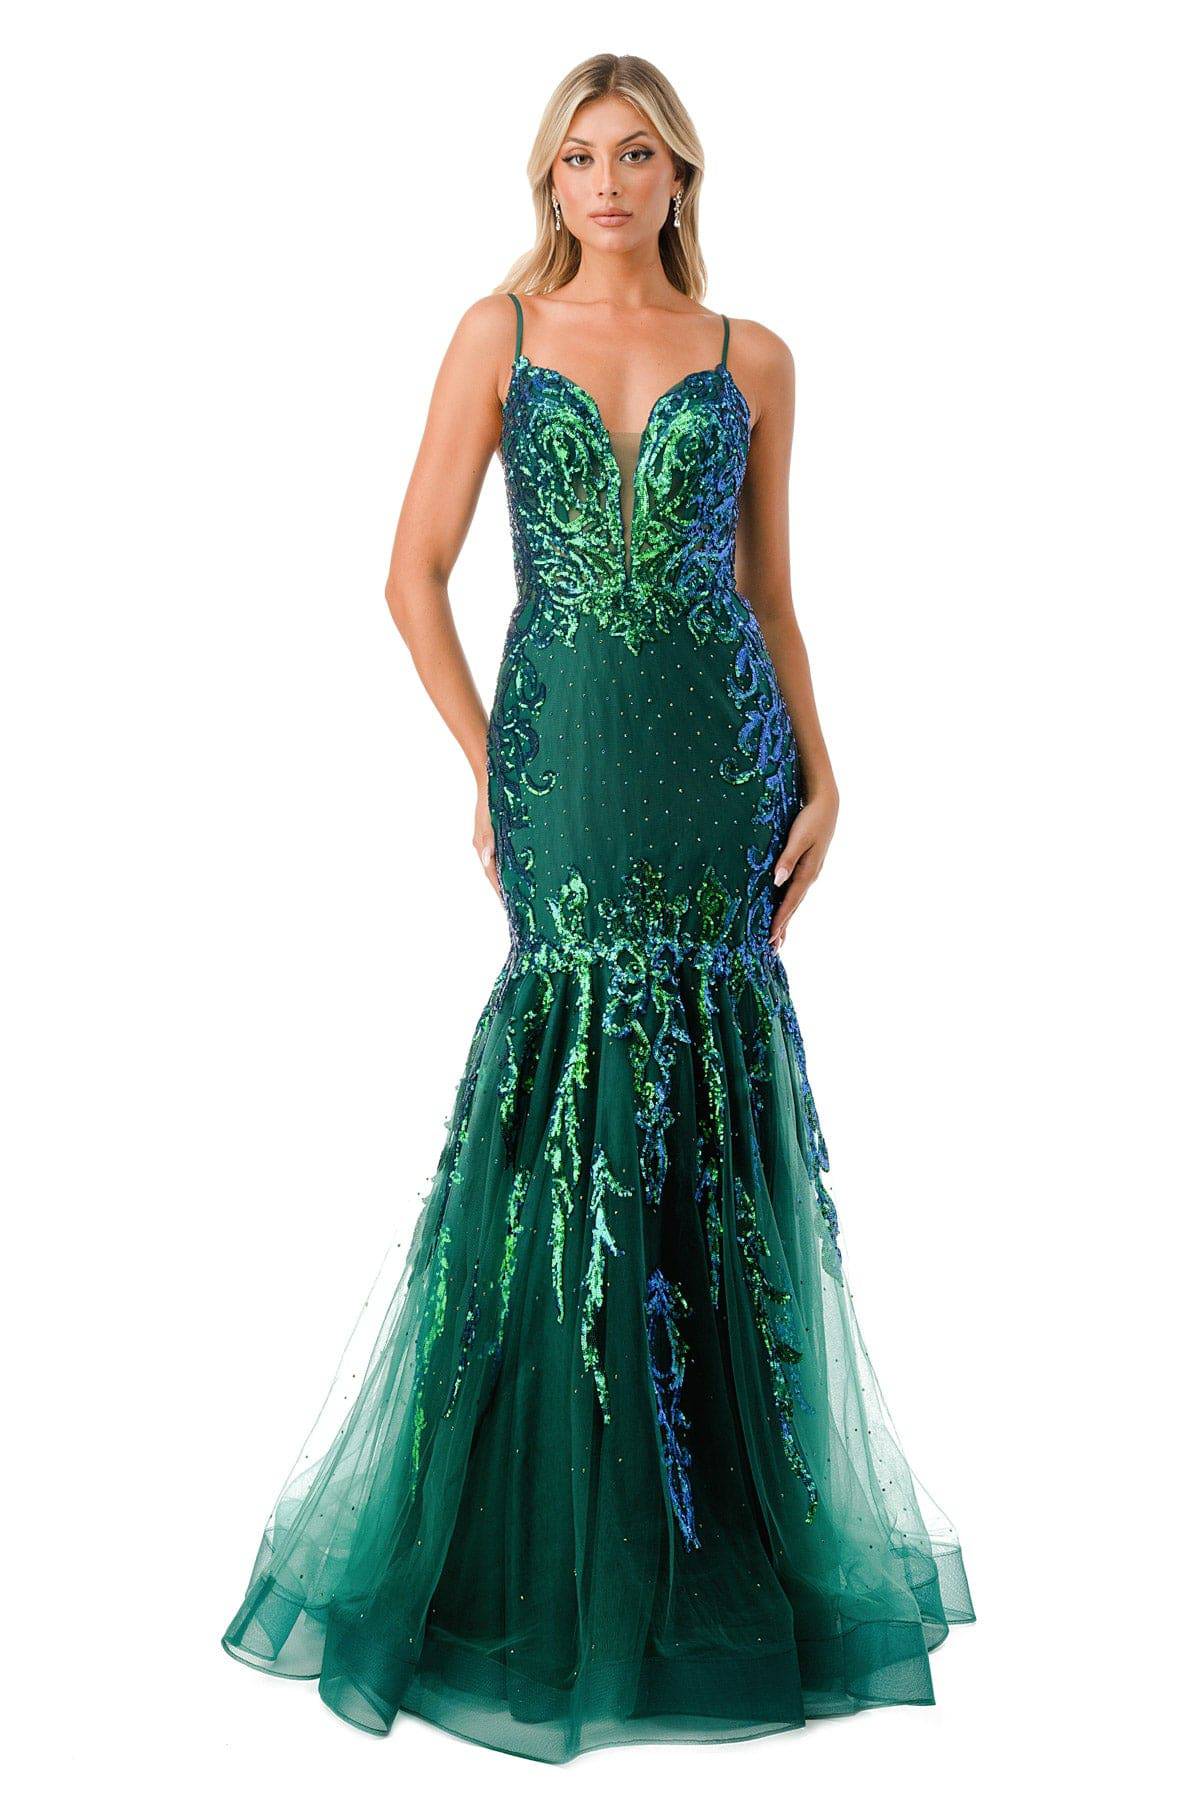 Aspeed Design L2659 Sparkling Emerald Green Mermaid Dress | 2 Colors - NORMA REED